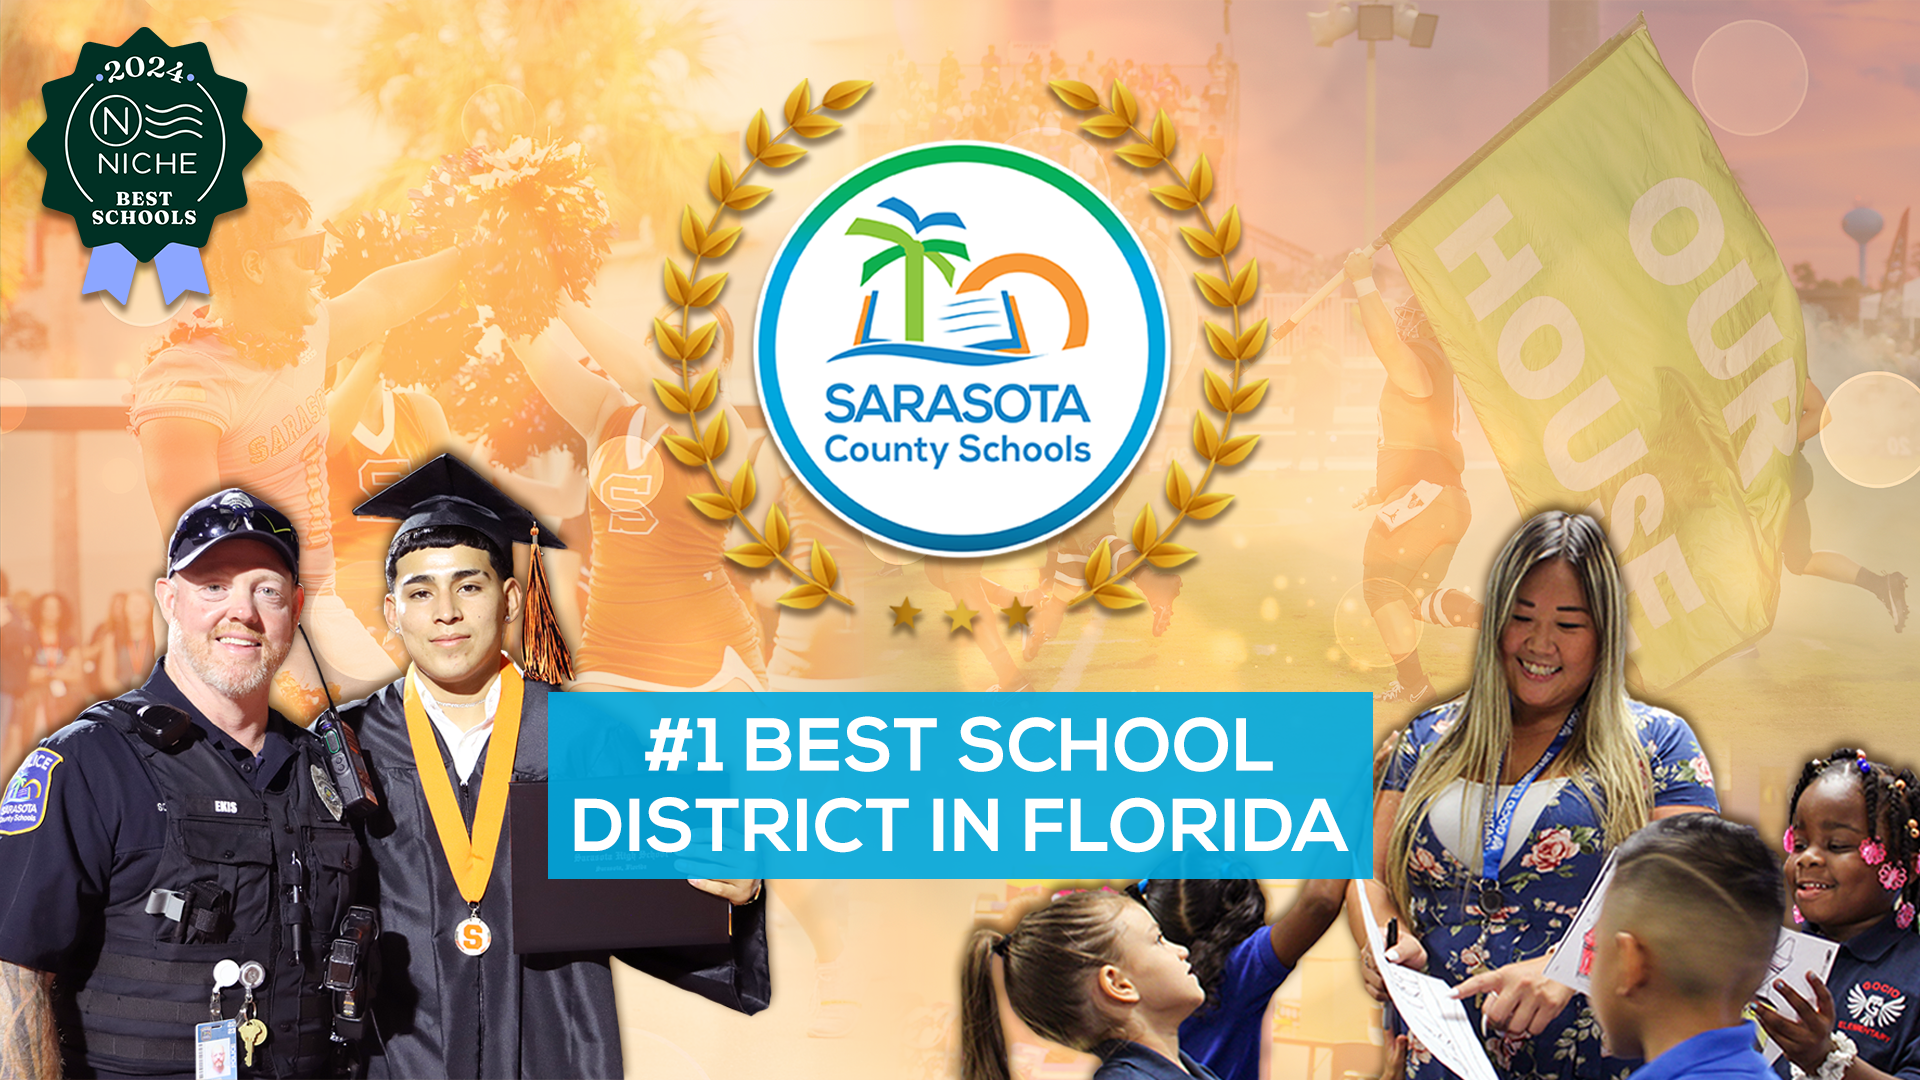 #1 School District in Florida according to Niche.com 2024